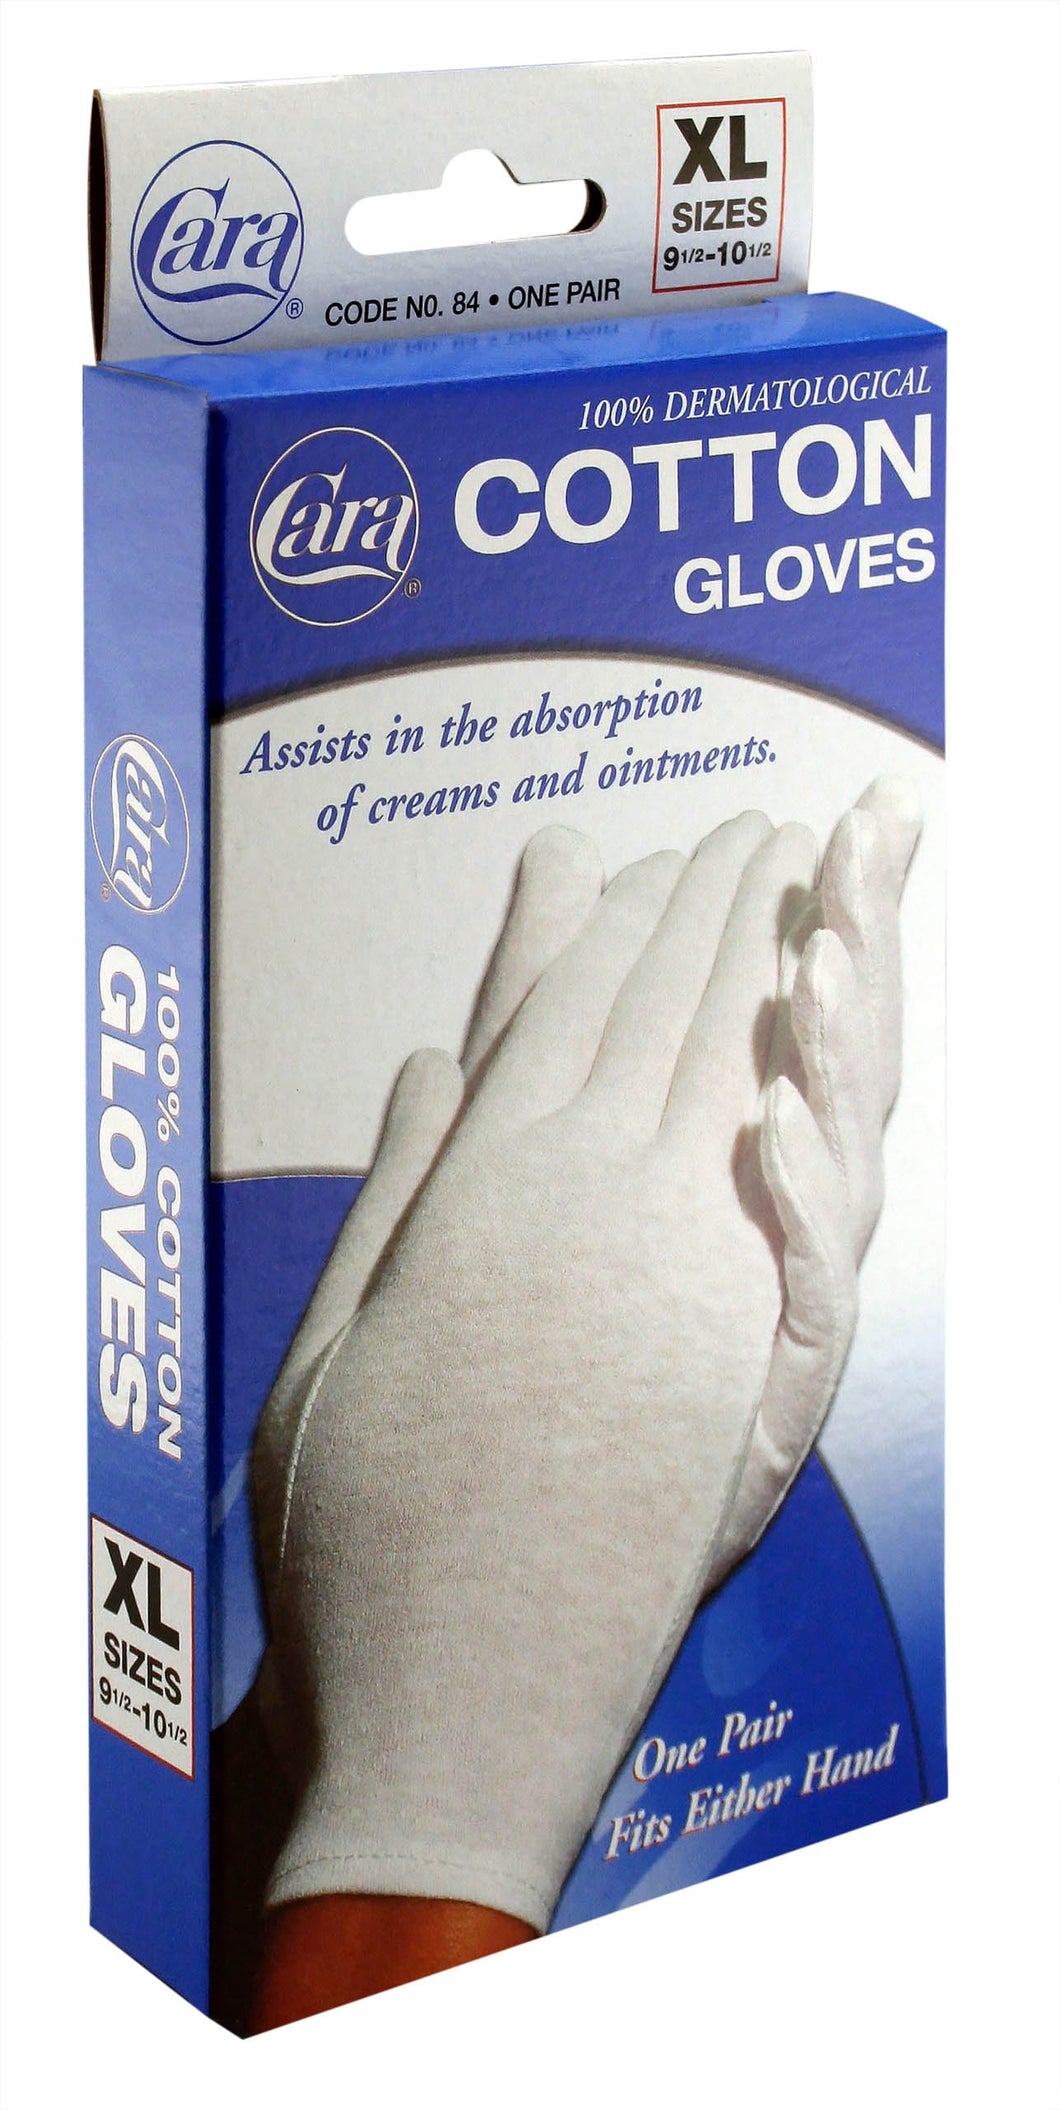 Dermatological Cotton Gloves - Extra Large